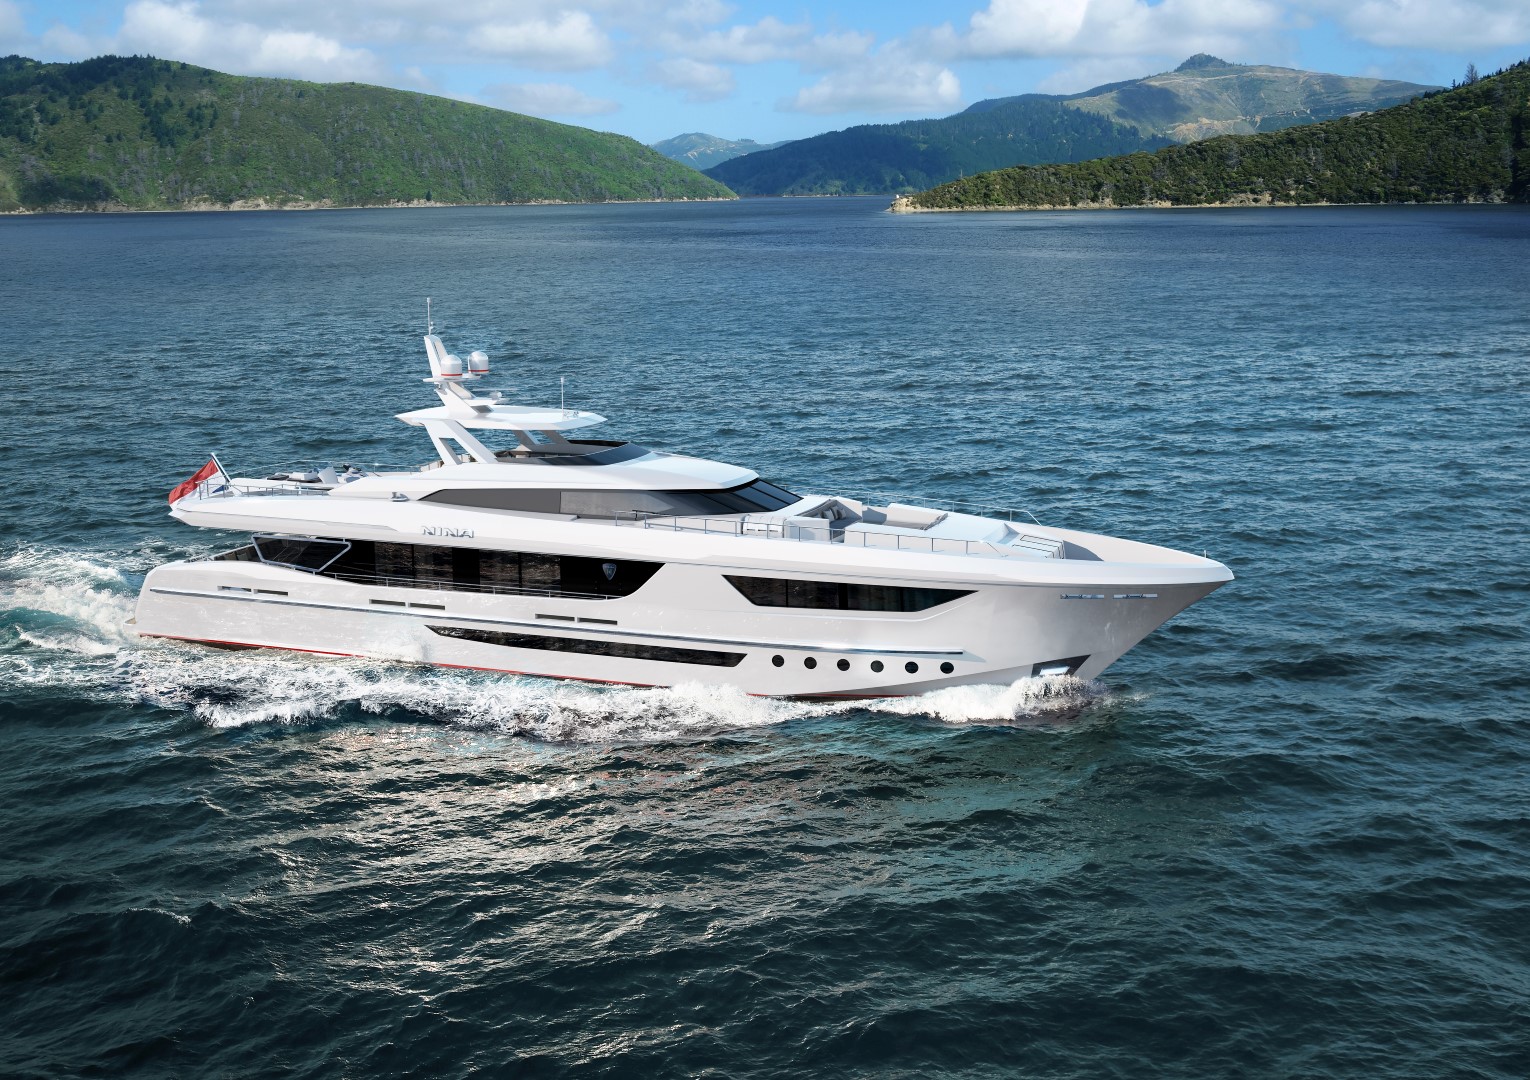 38m super yacht NINA - side view - Yacht Charter & Superyacht News